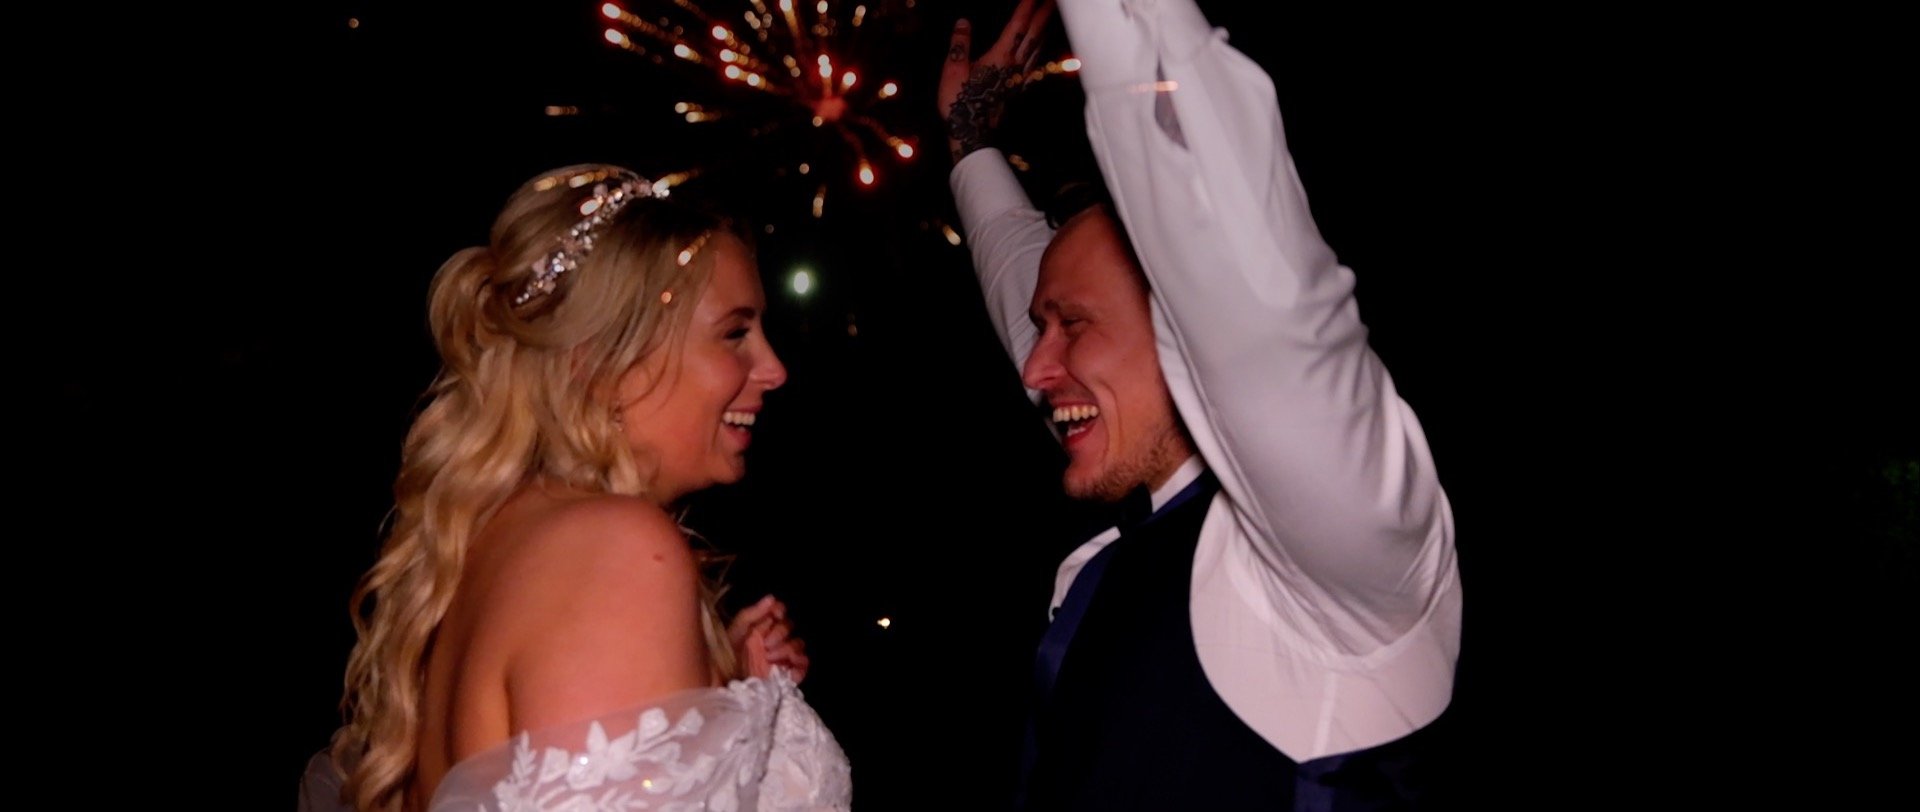 Crondon Park Wedding Videography - 3 Cheers Media - Fireworks.jpg